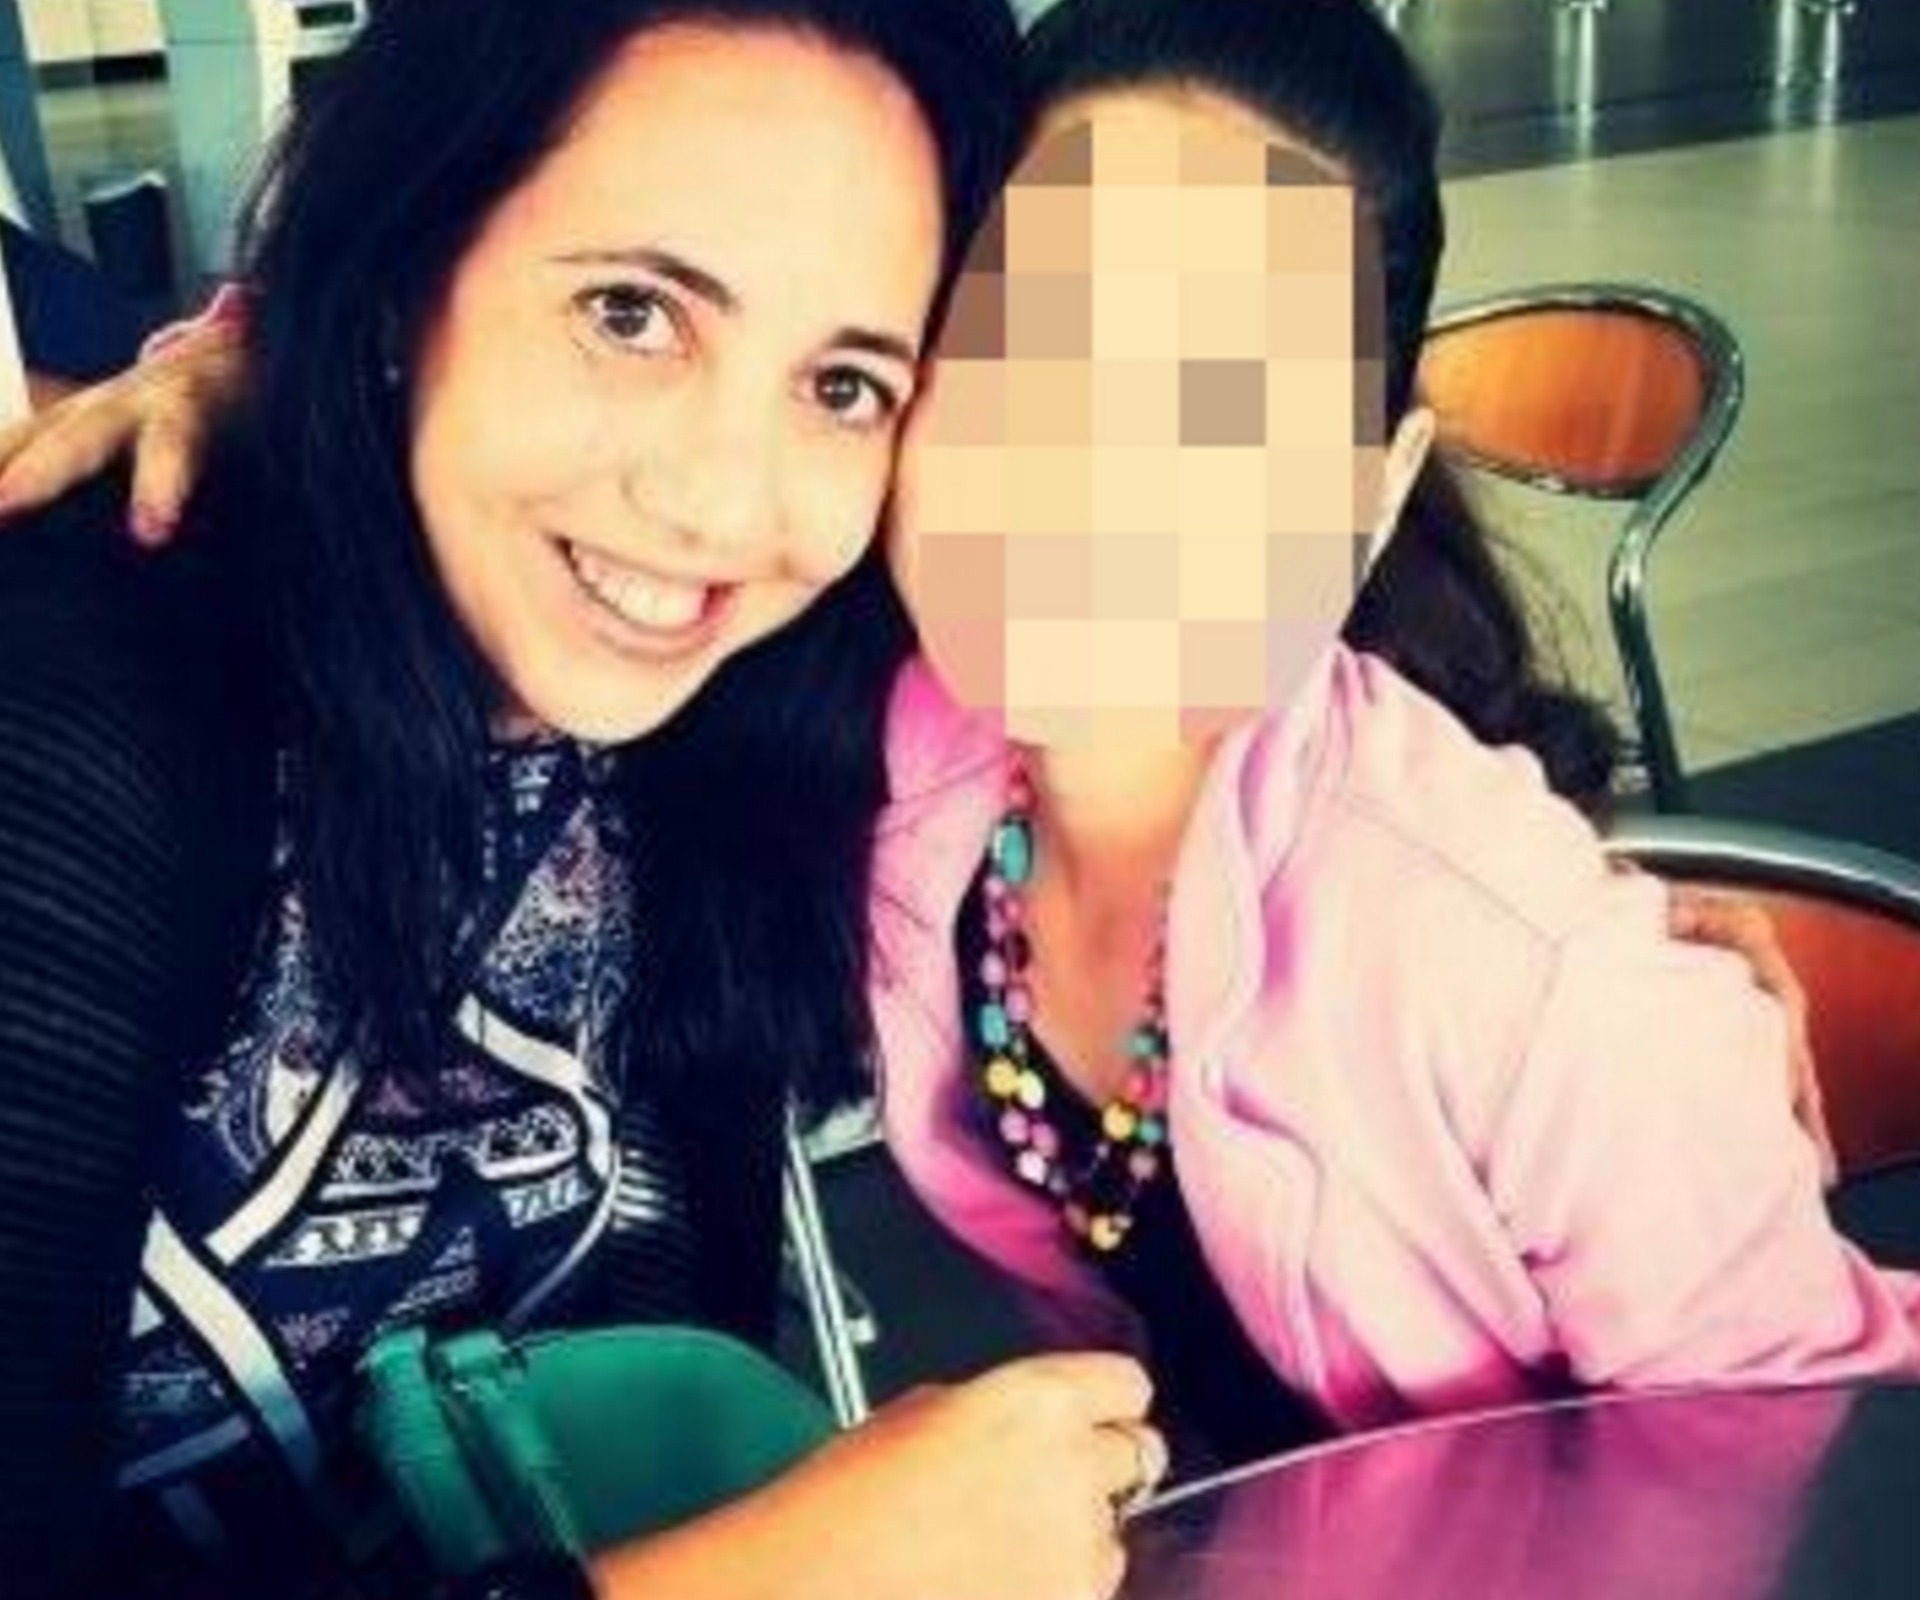 Australian woman dies in Bali after drinking close to 30 vodka shots